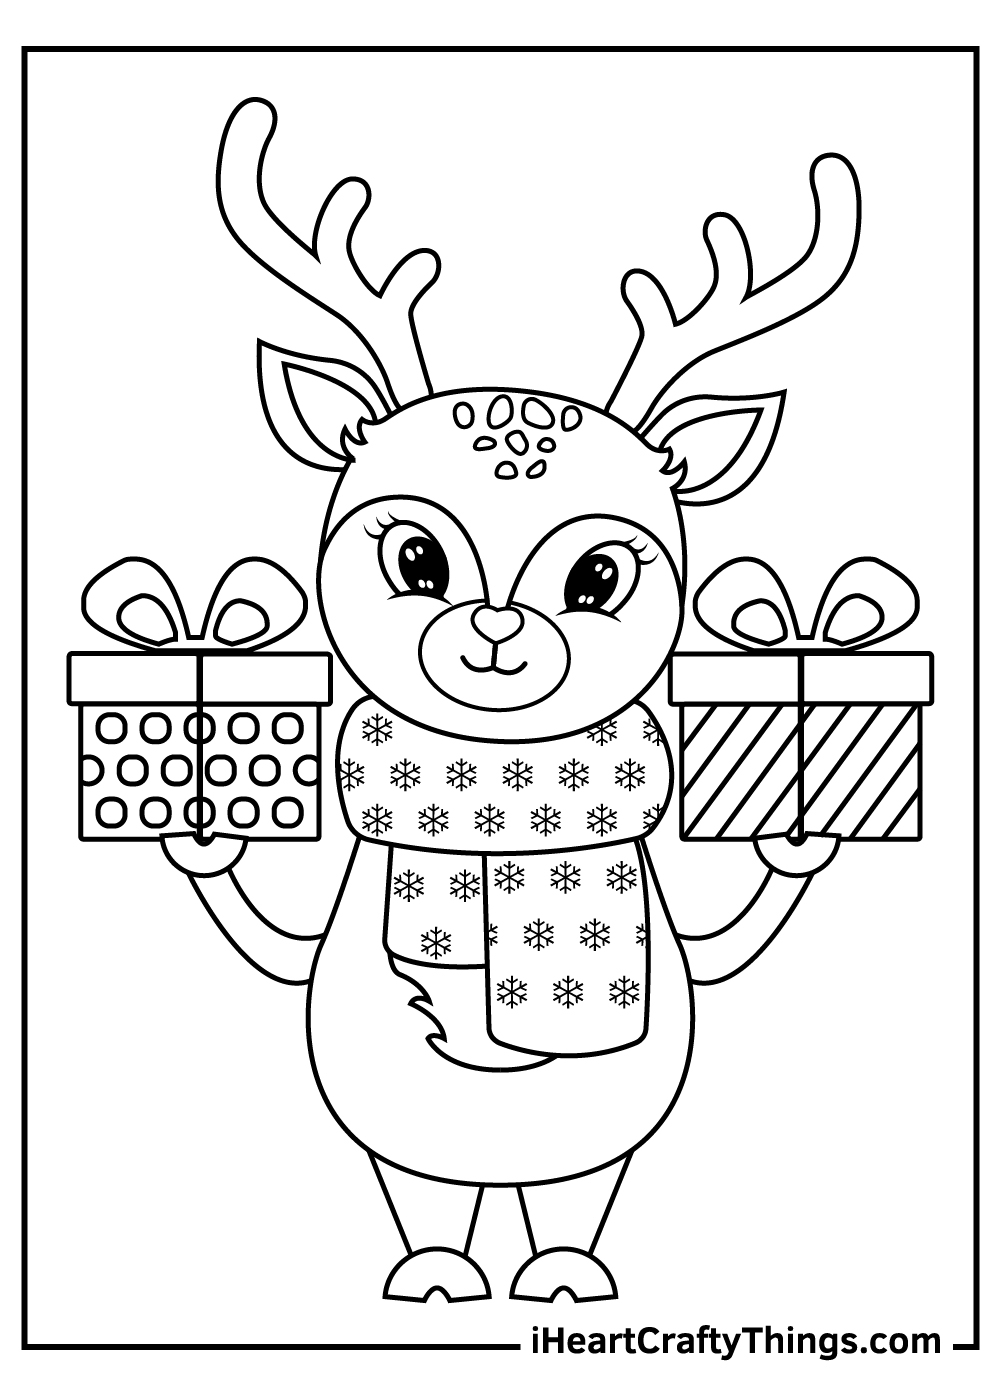 Christmas reindeers coloring pages free printables